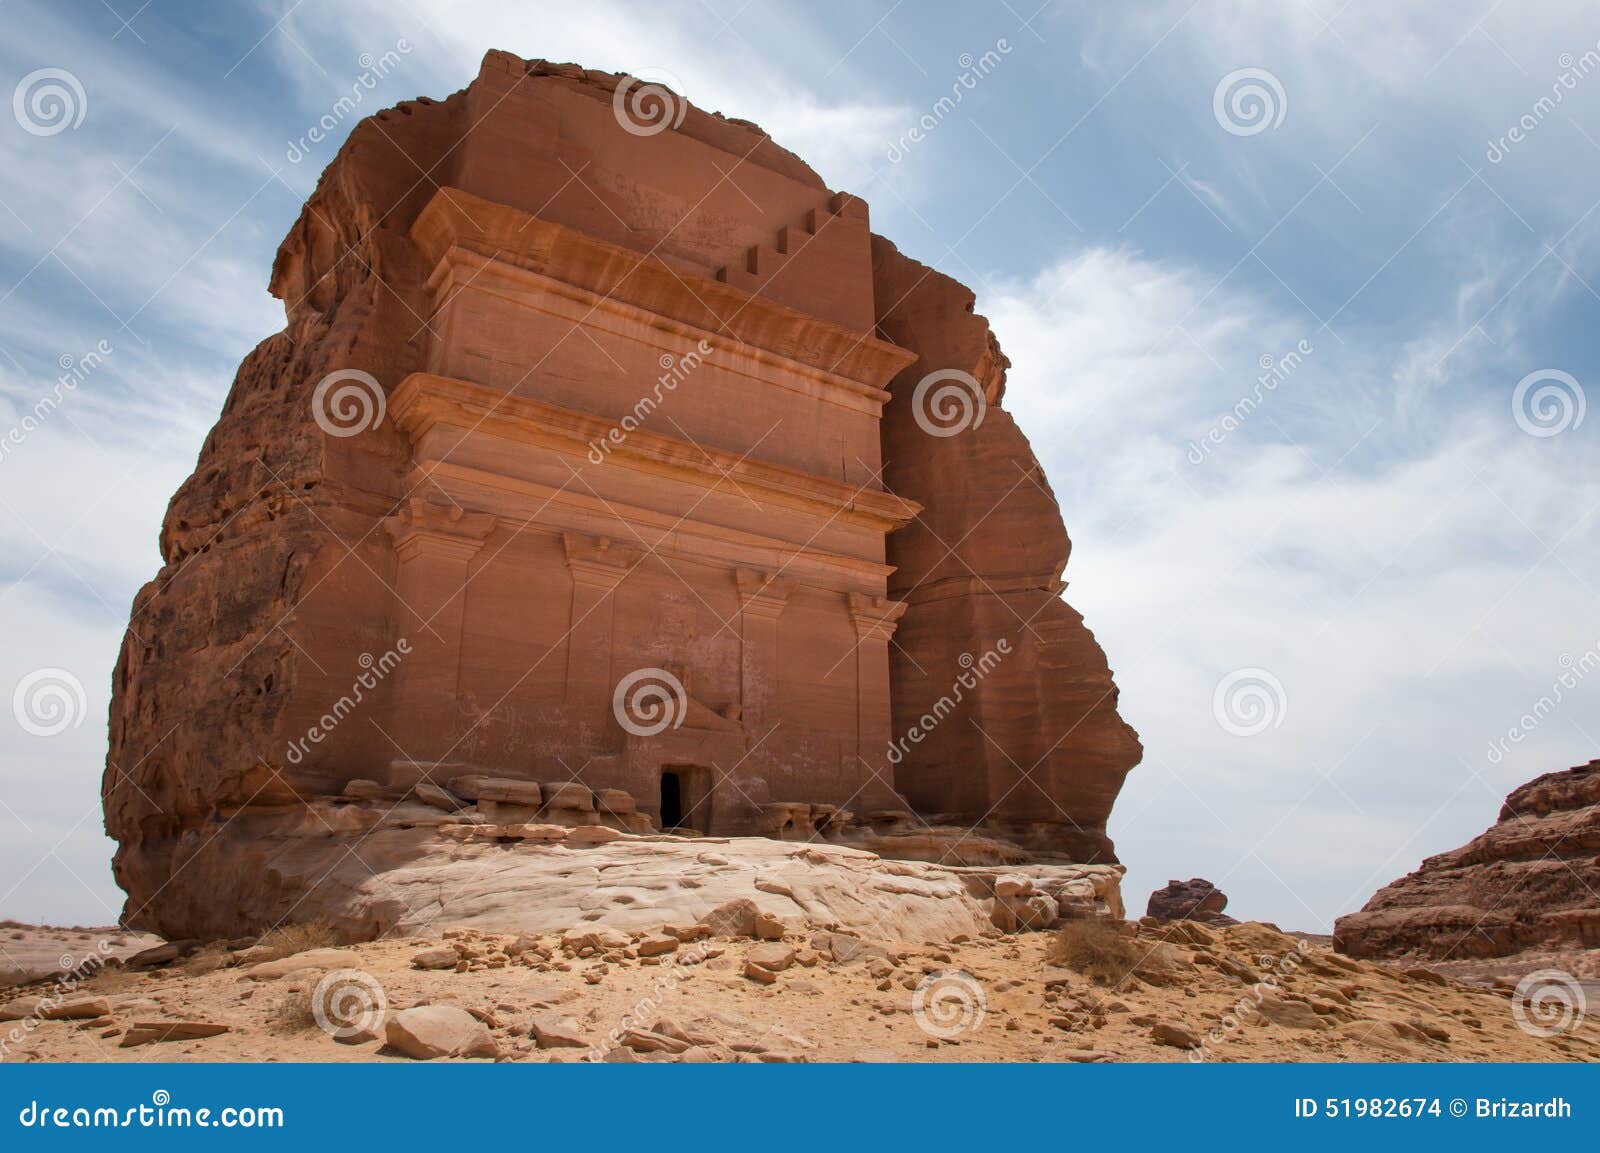 nabatean tomb in madaÃÂ®n saleh archeological site, saudi arabia